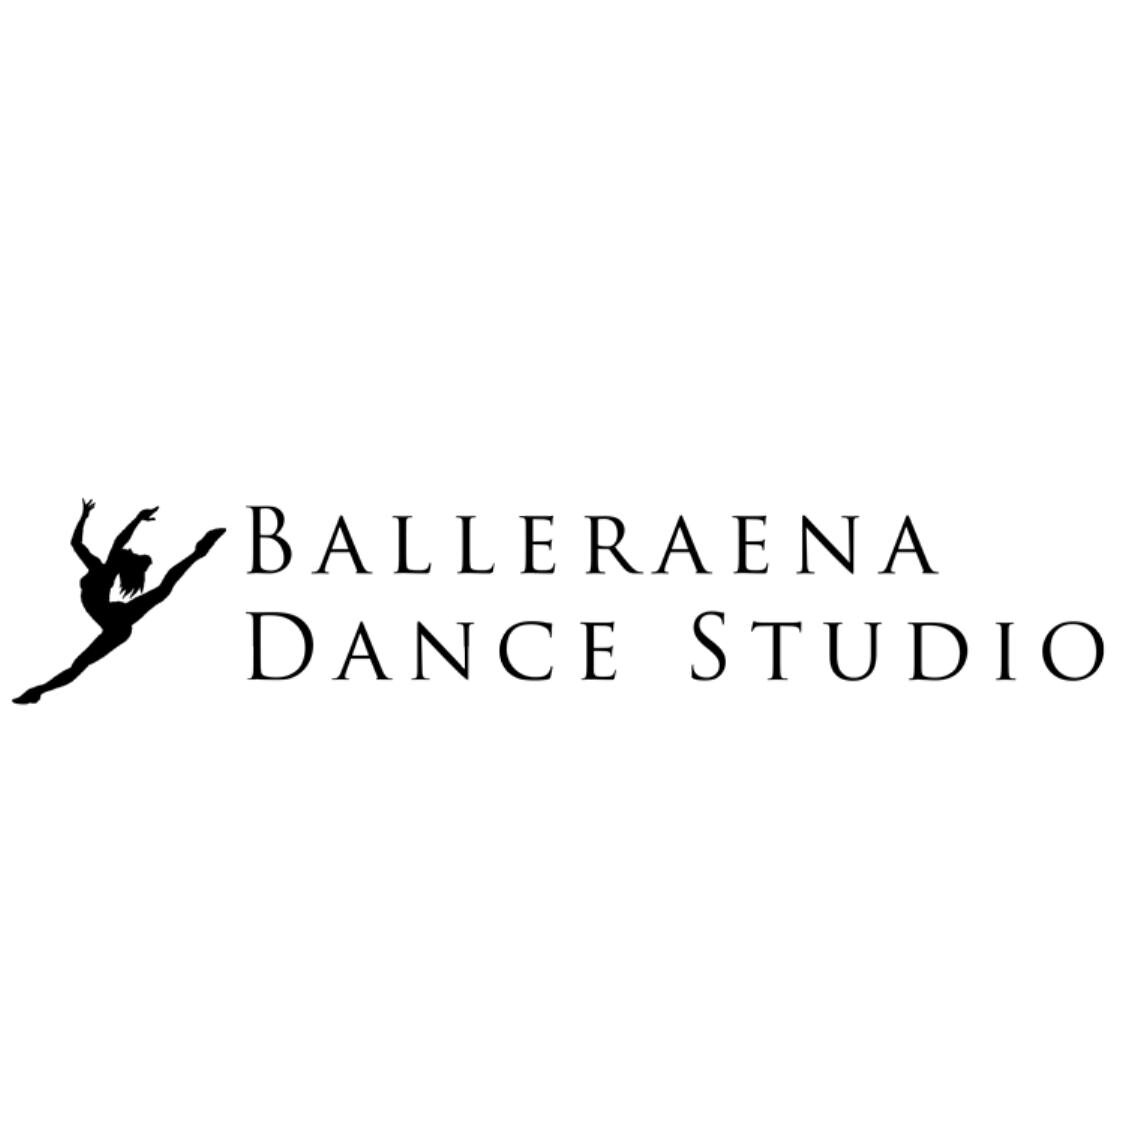 Balleraena Logo.jpg